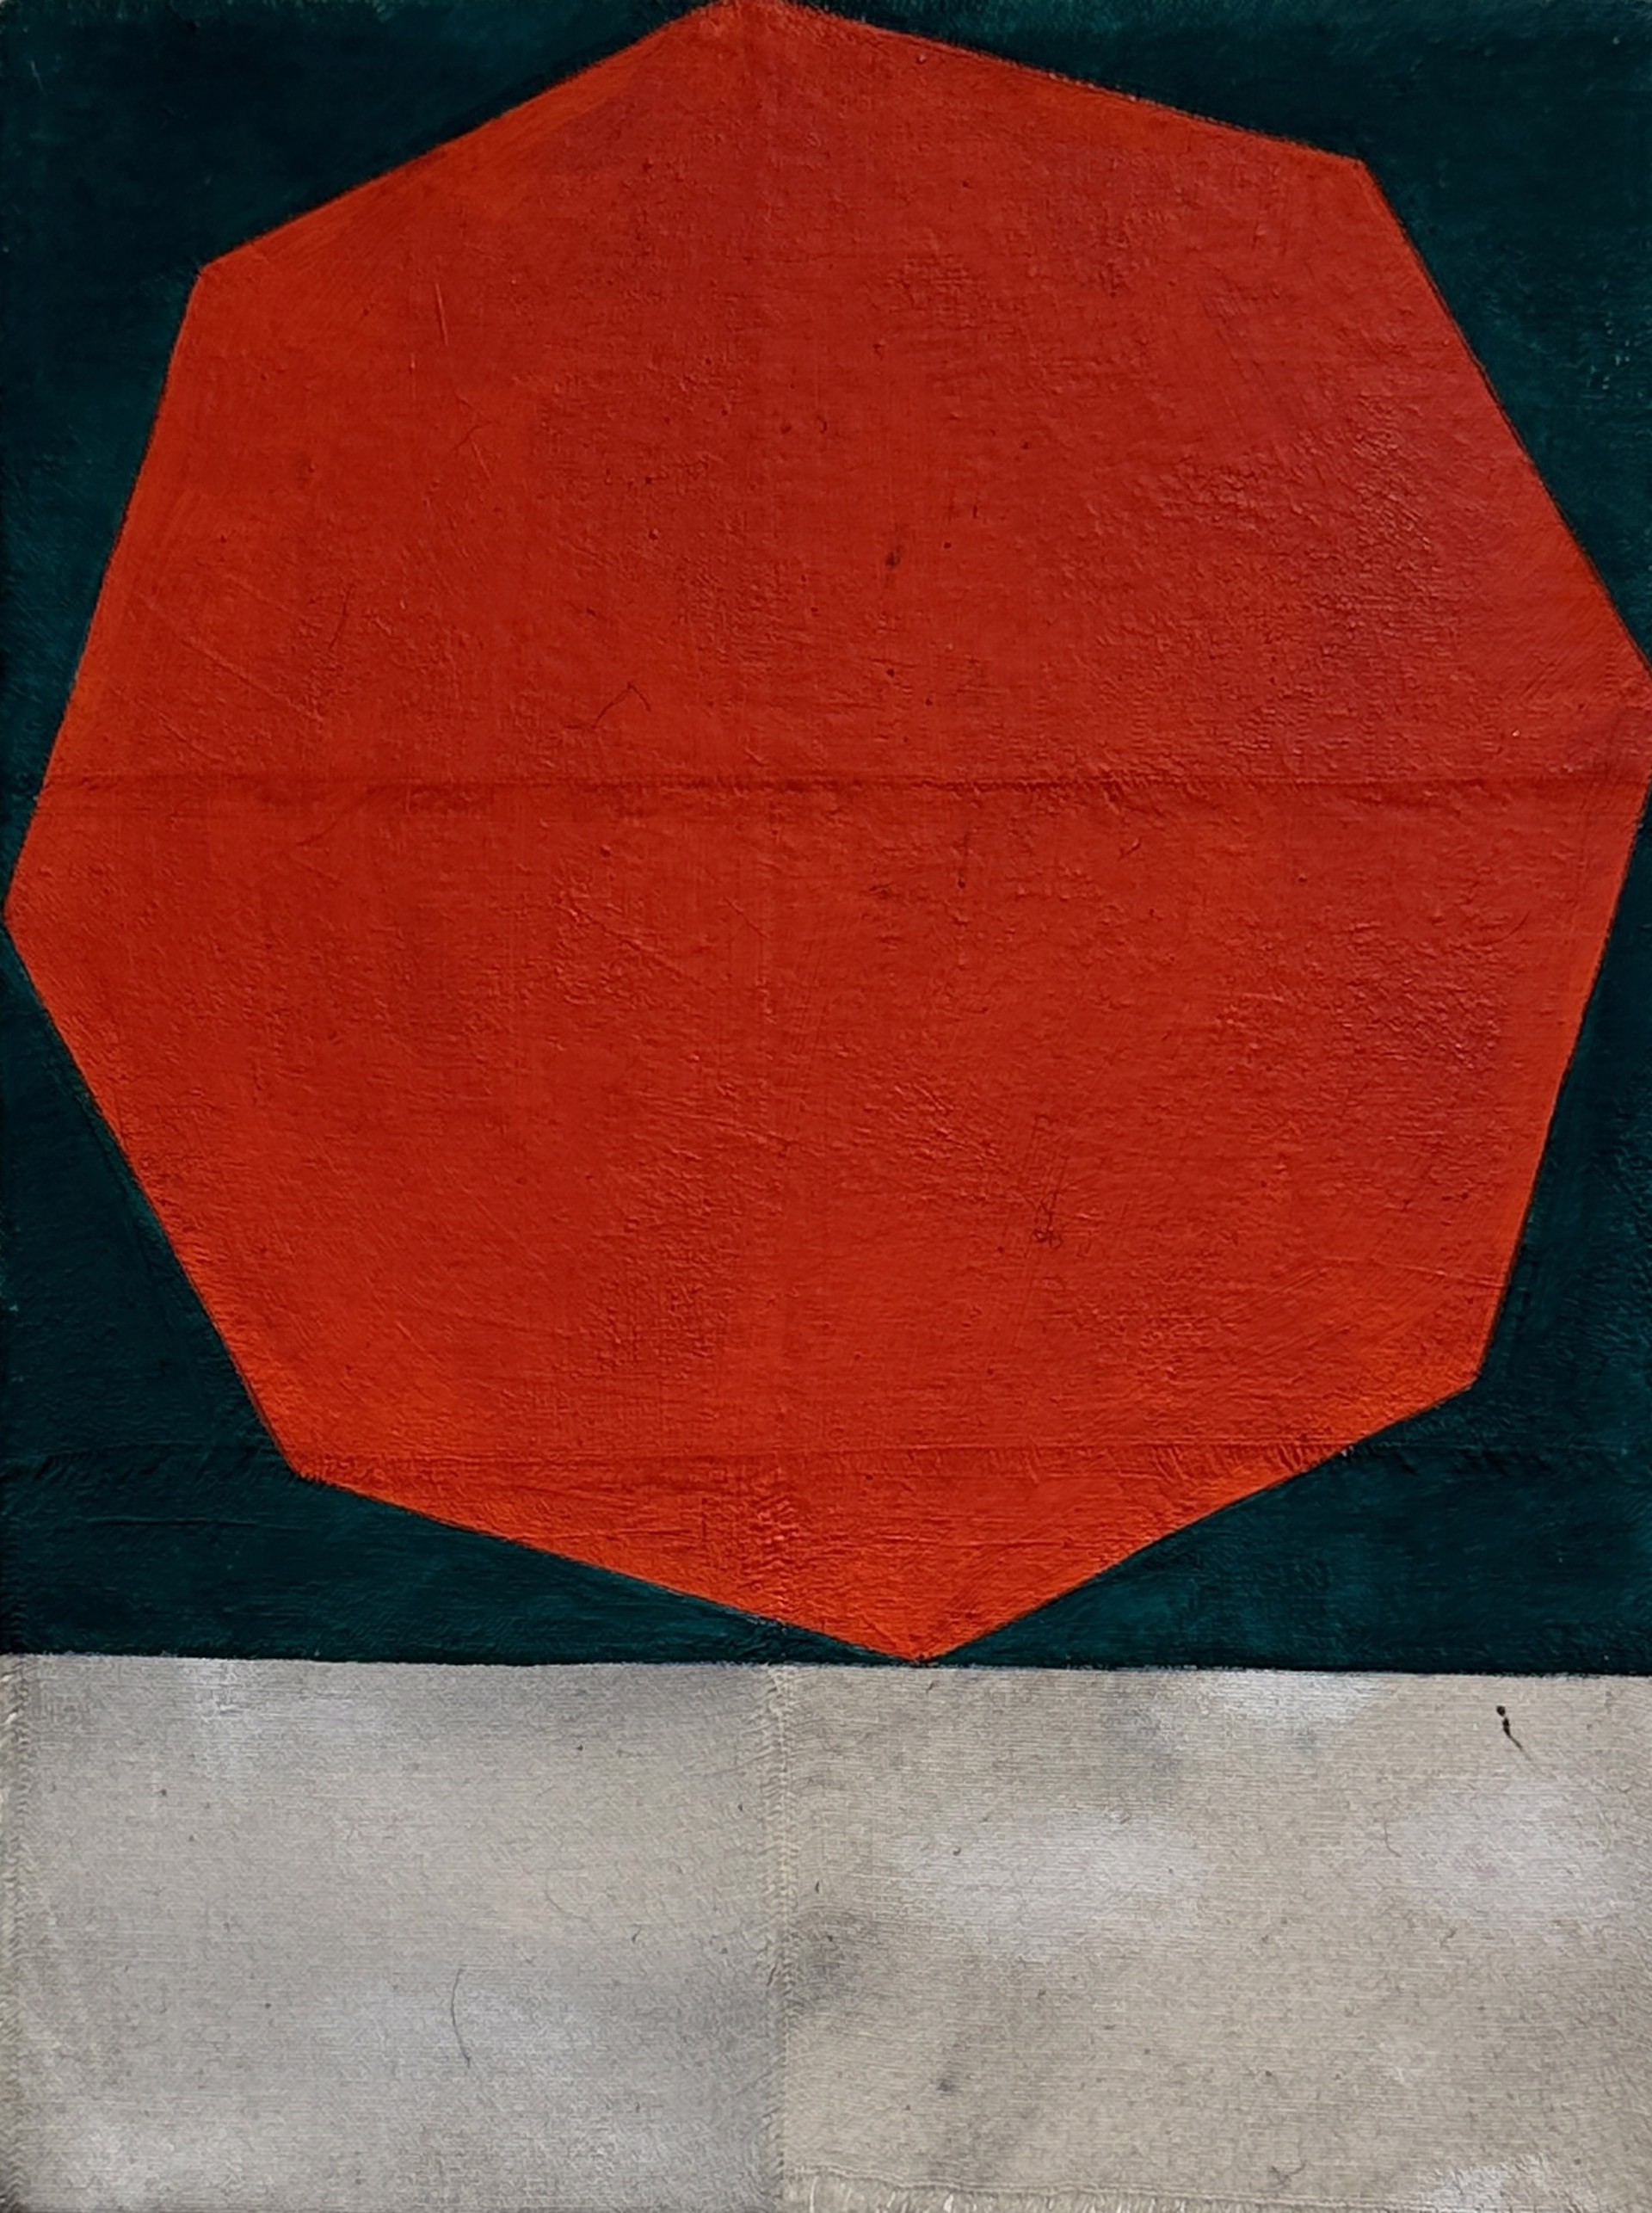 Untitled (red octagon) by Matt Messinger